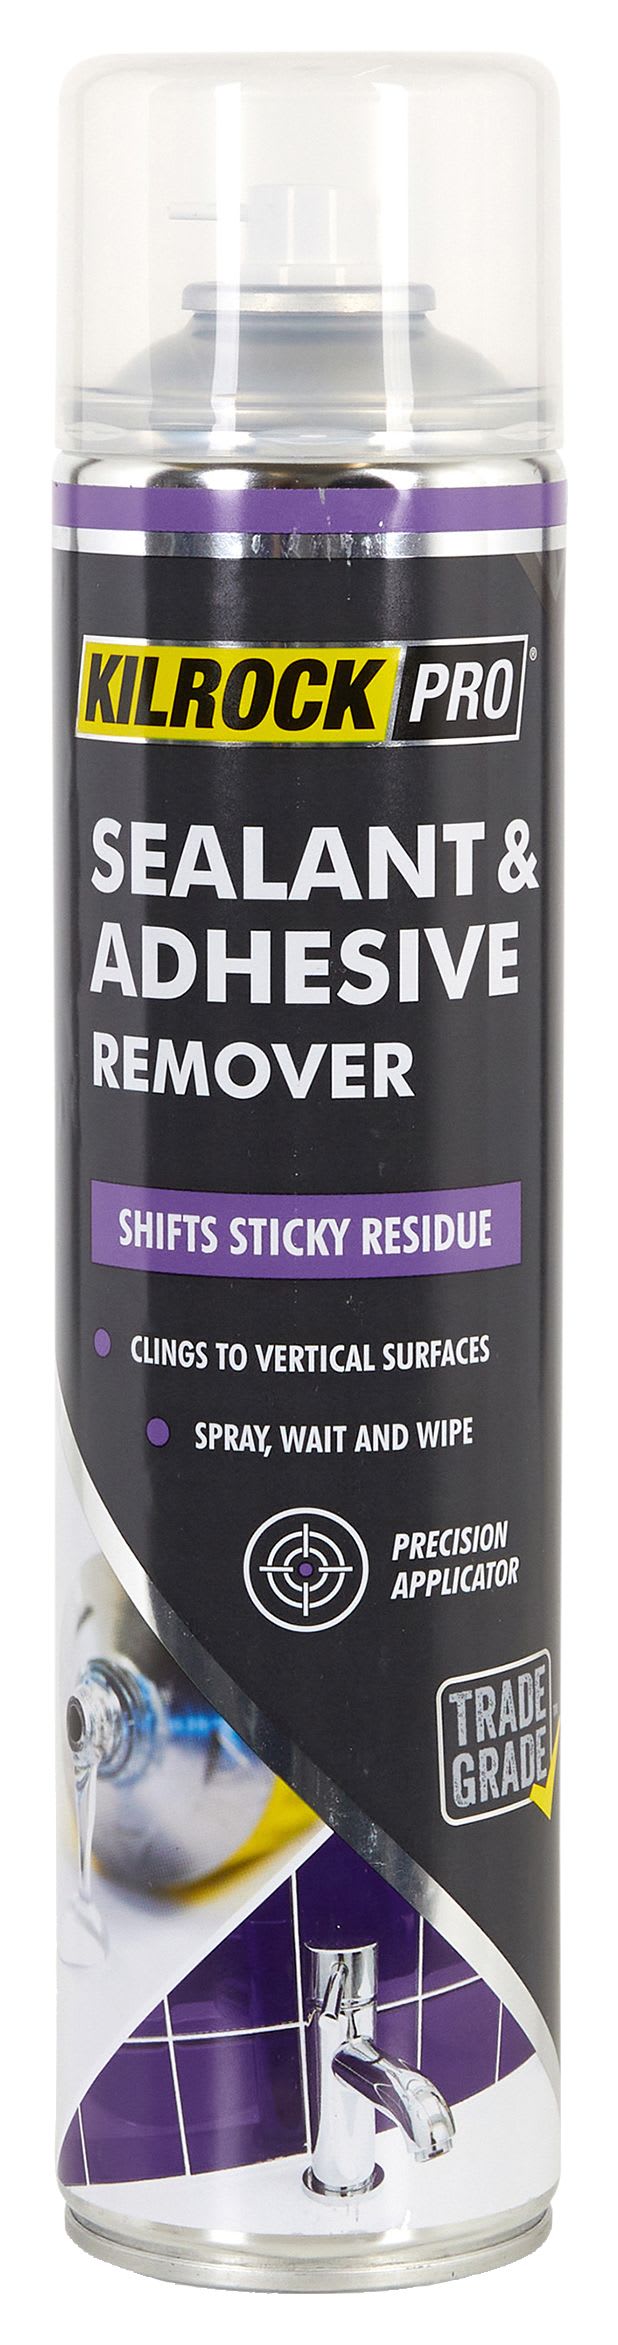 KilrockPRO Sealant & Adhesive Remover - 600ml